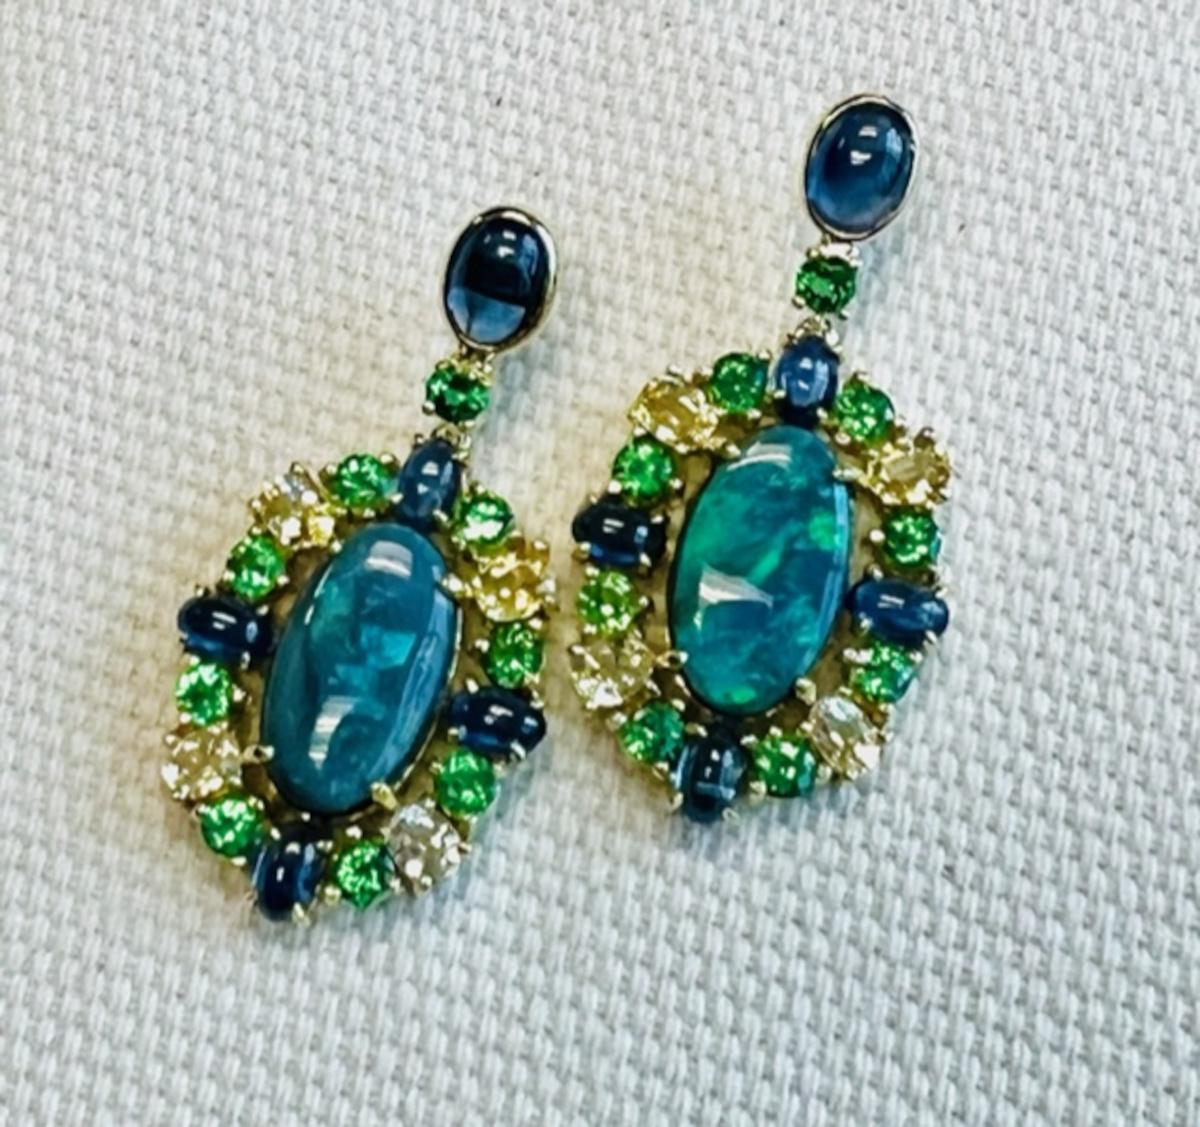 Black Opal, Blue Sapphire, Yellow Sapphire, Tsavorite Garnet Dangle Earrings 2